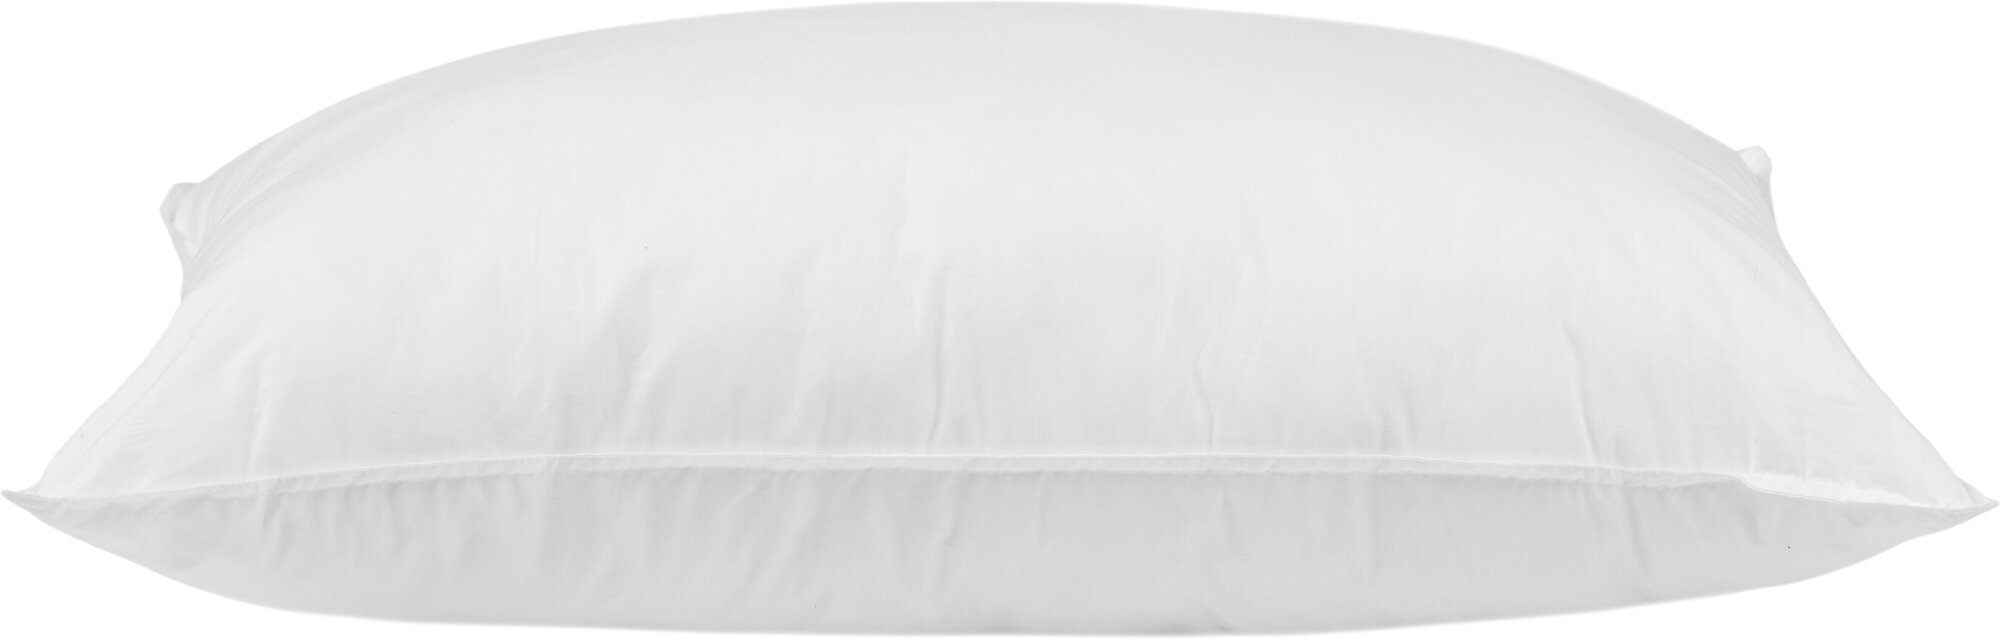 Подушка Askona Cotton Roll 50*70 см - фотография № 1